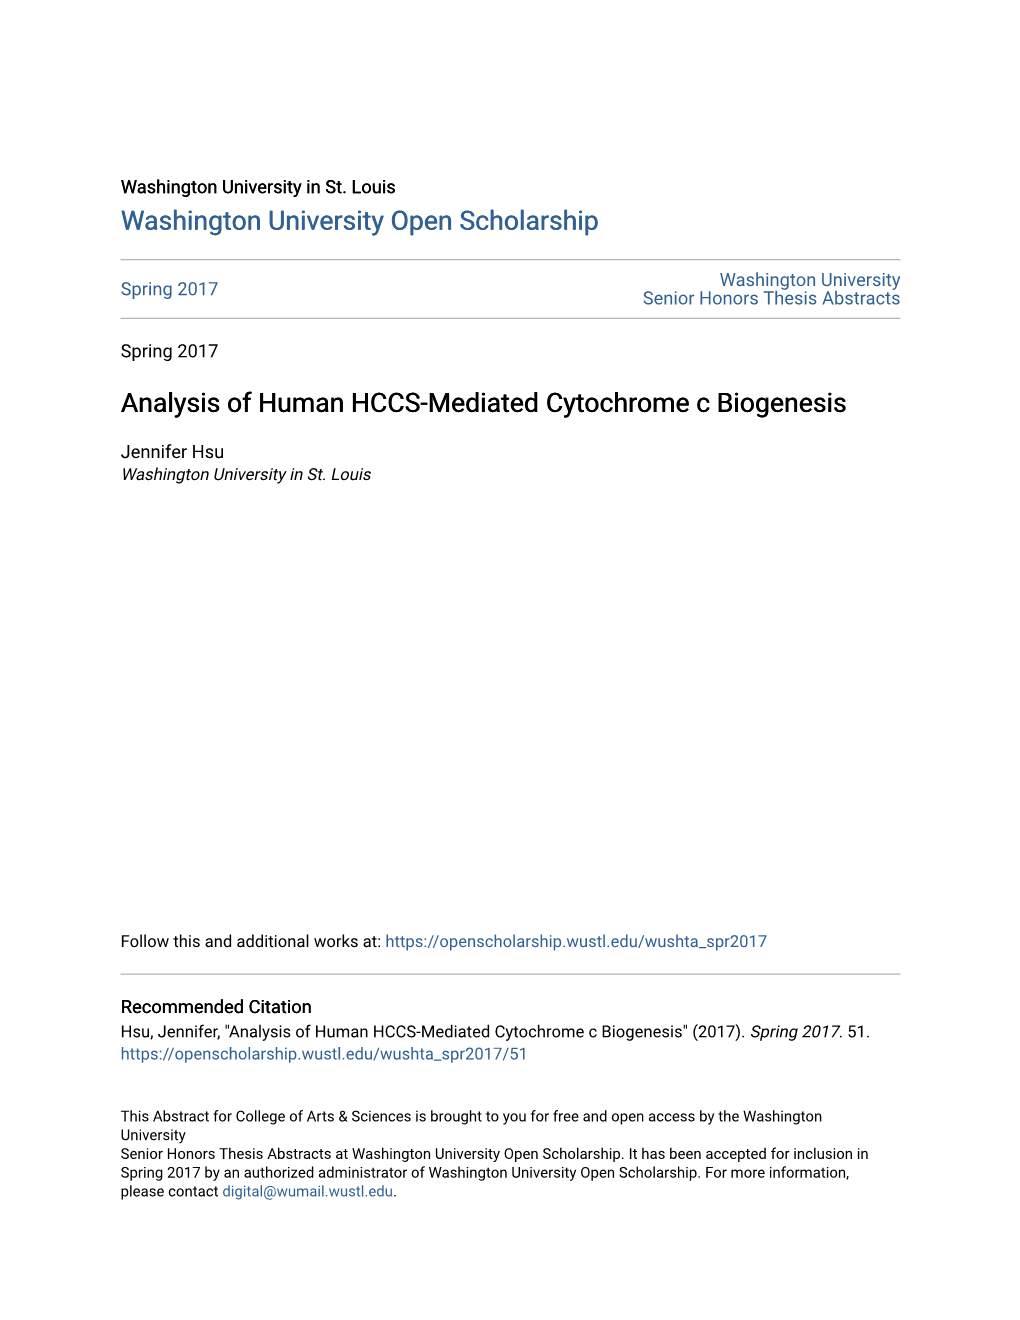 Analysis of Human HCCS-Mediated Cytochrome C Biogenesis